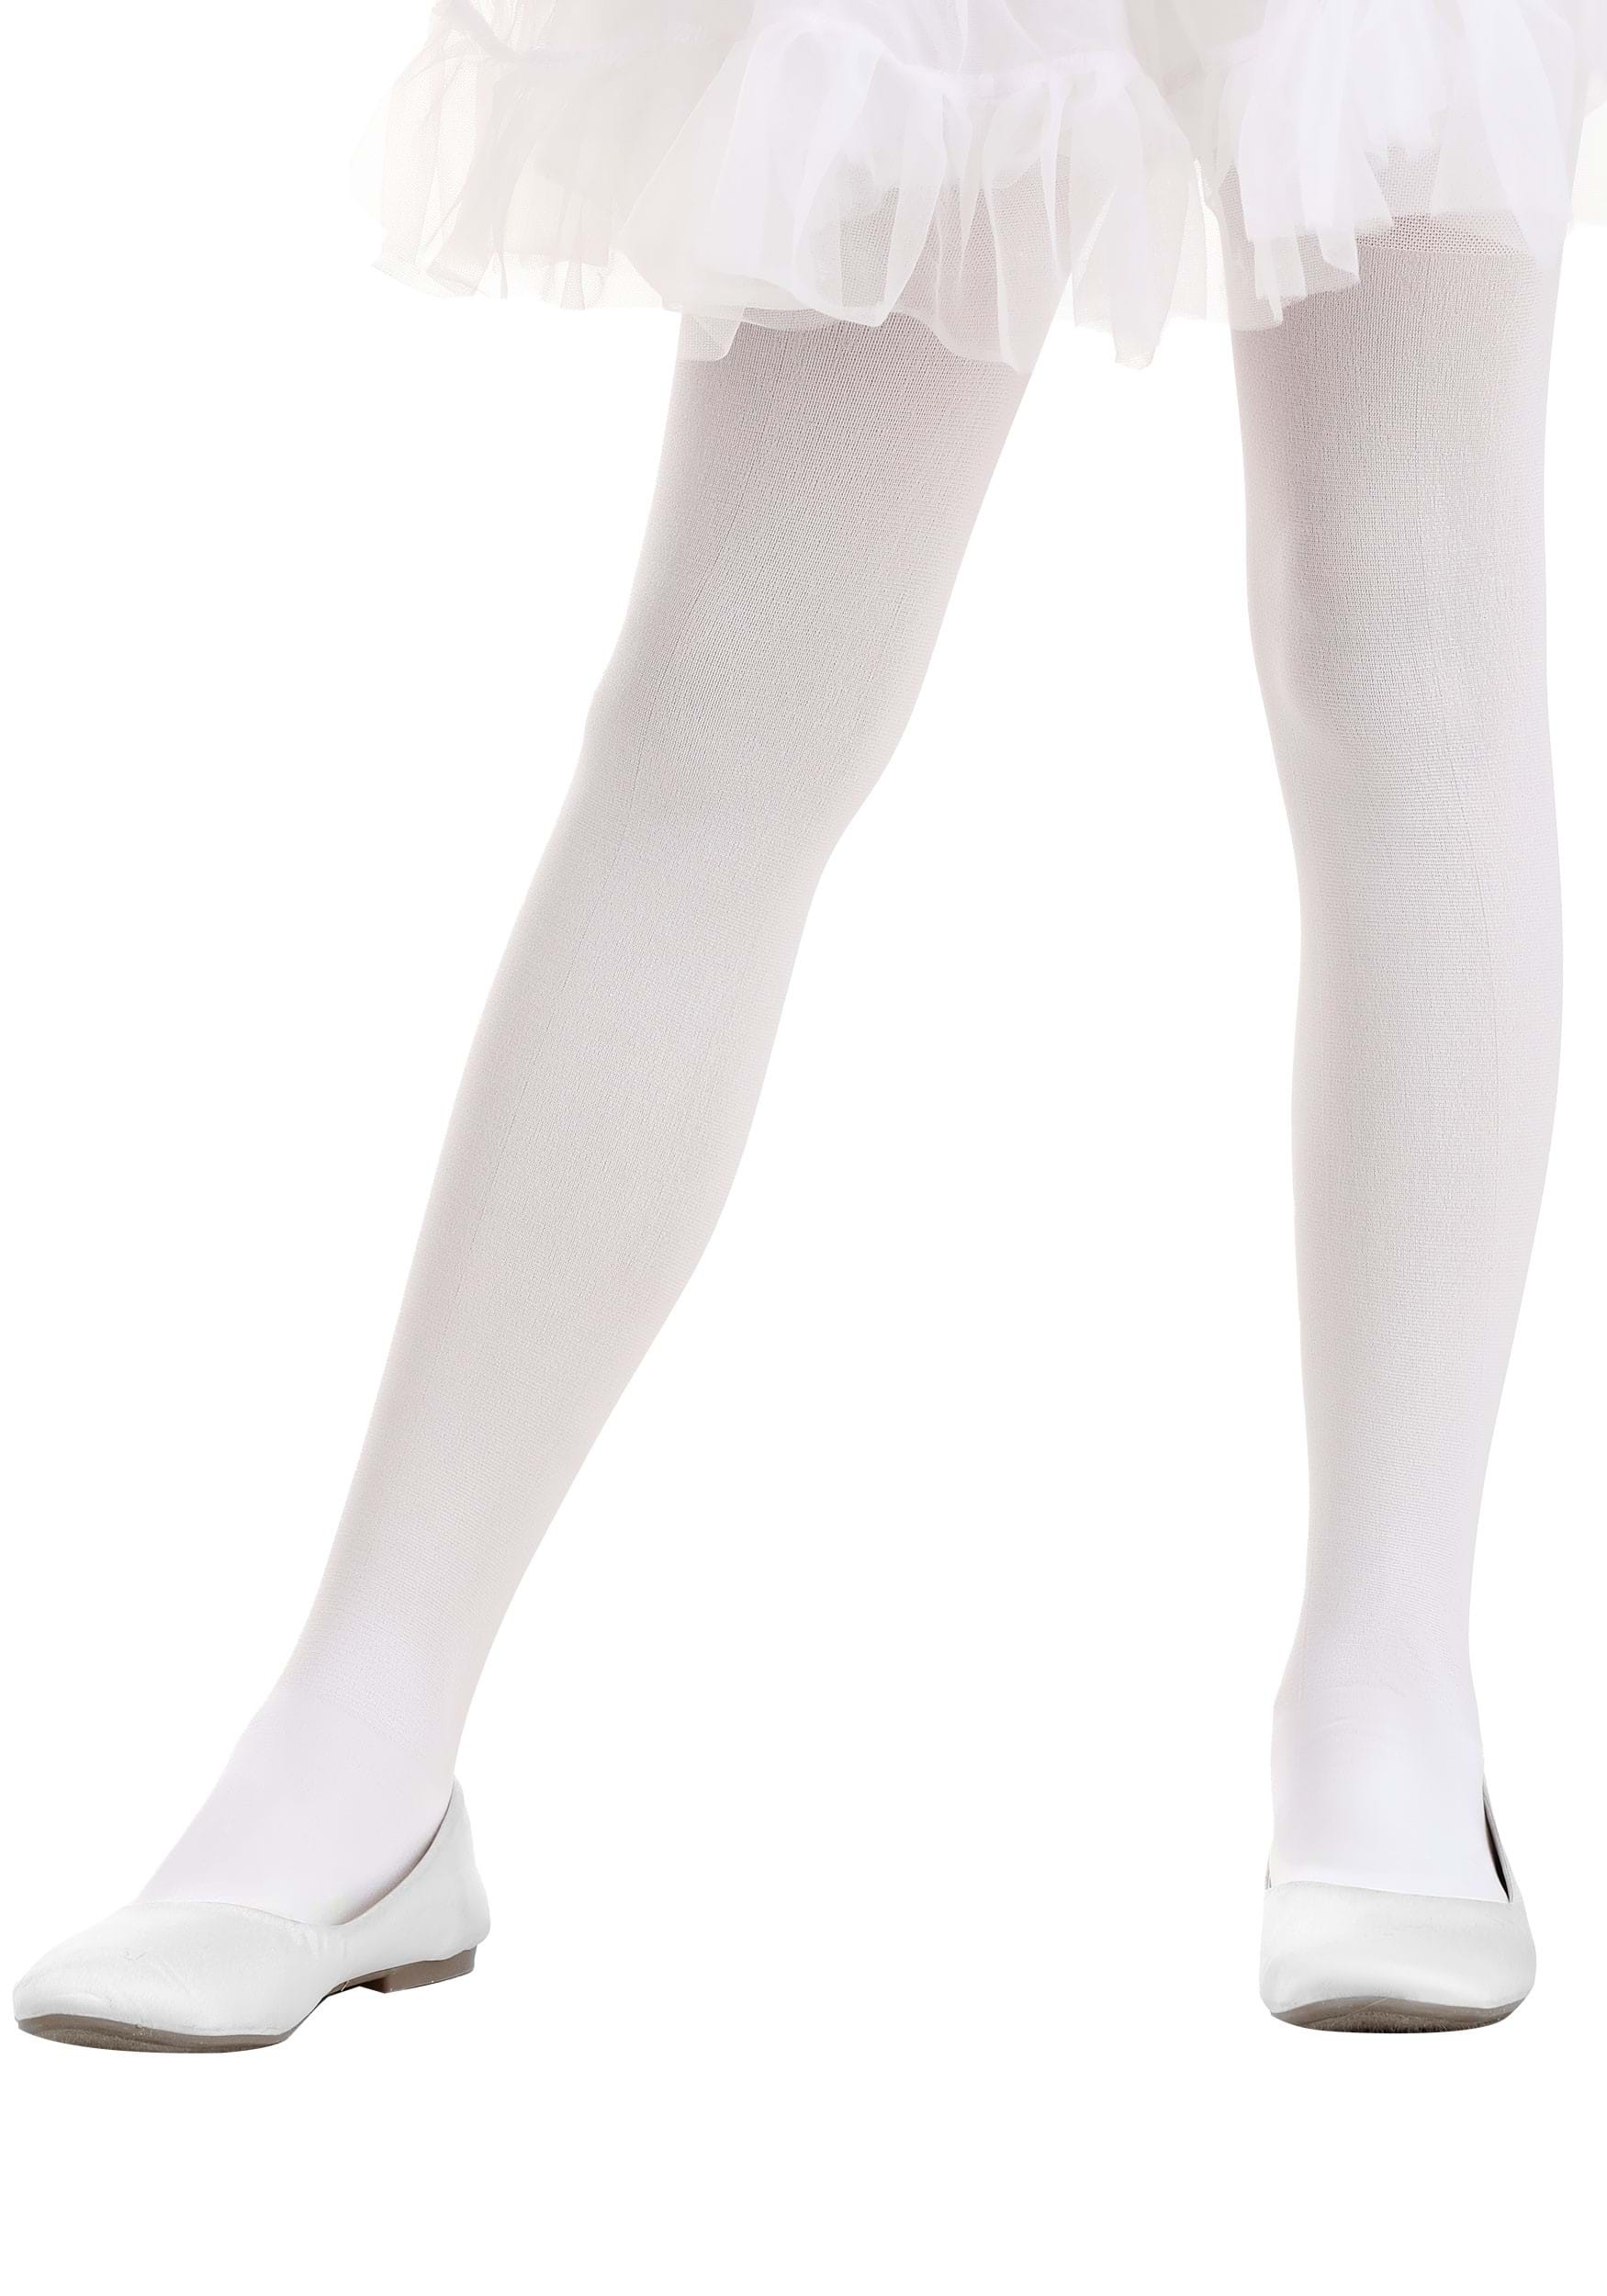 Children's Red & White striped Tights Girls' Halloween Costume Medium Rag  Doll